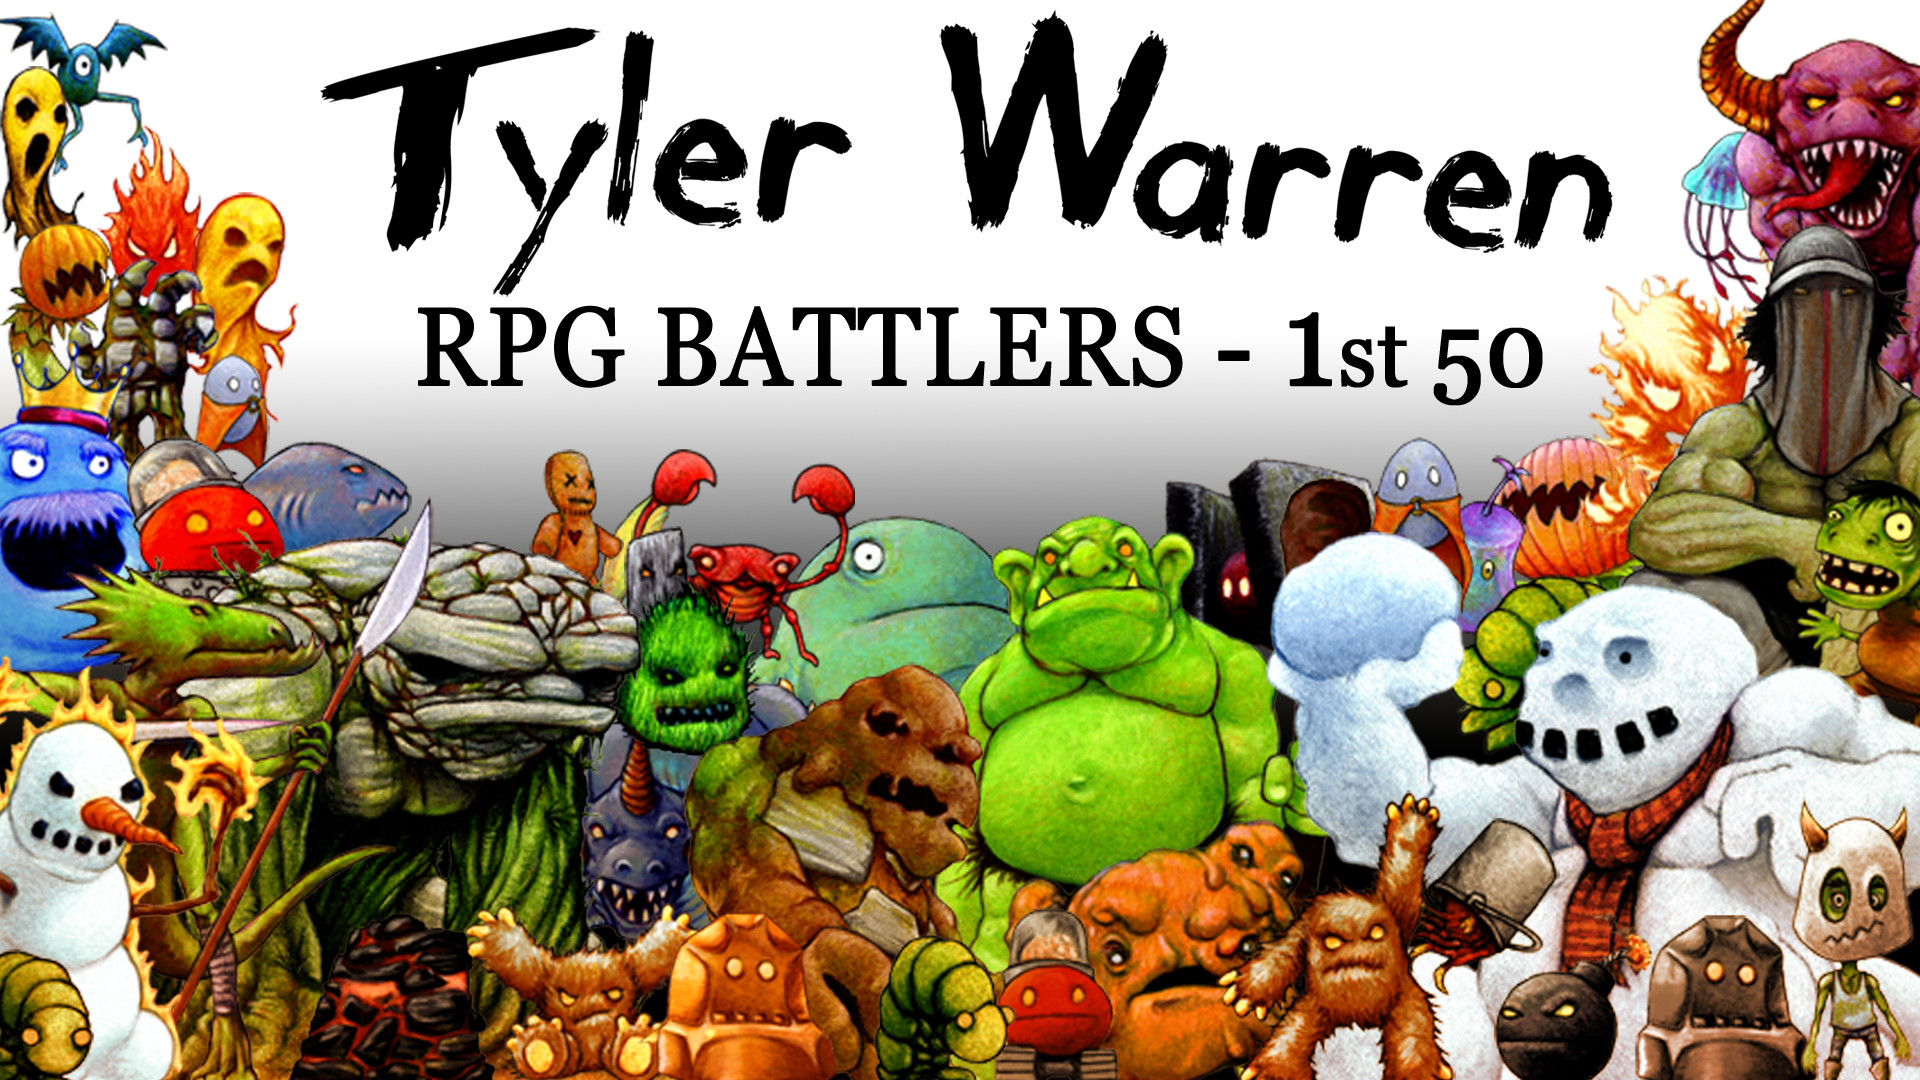 Steam 上的RPG Maker MV - Tyler Warren RPG Battlers - 1st 50